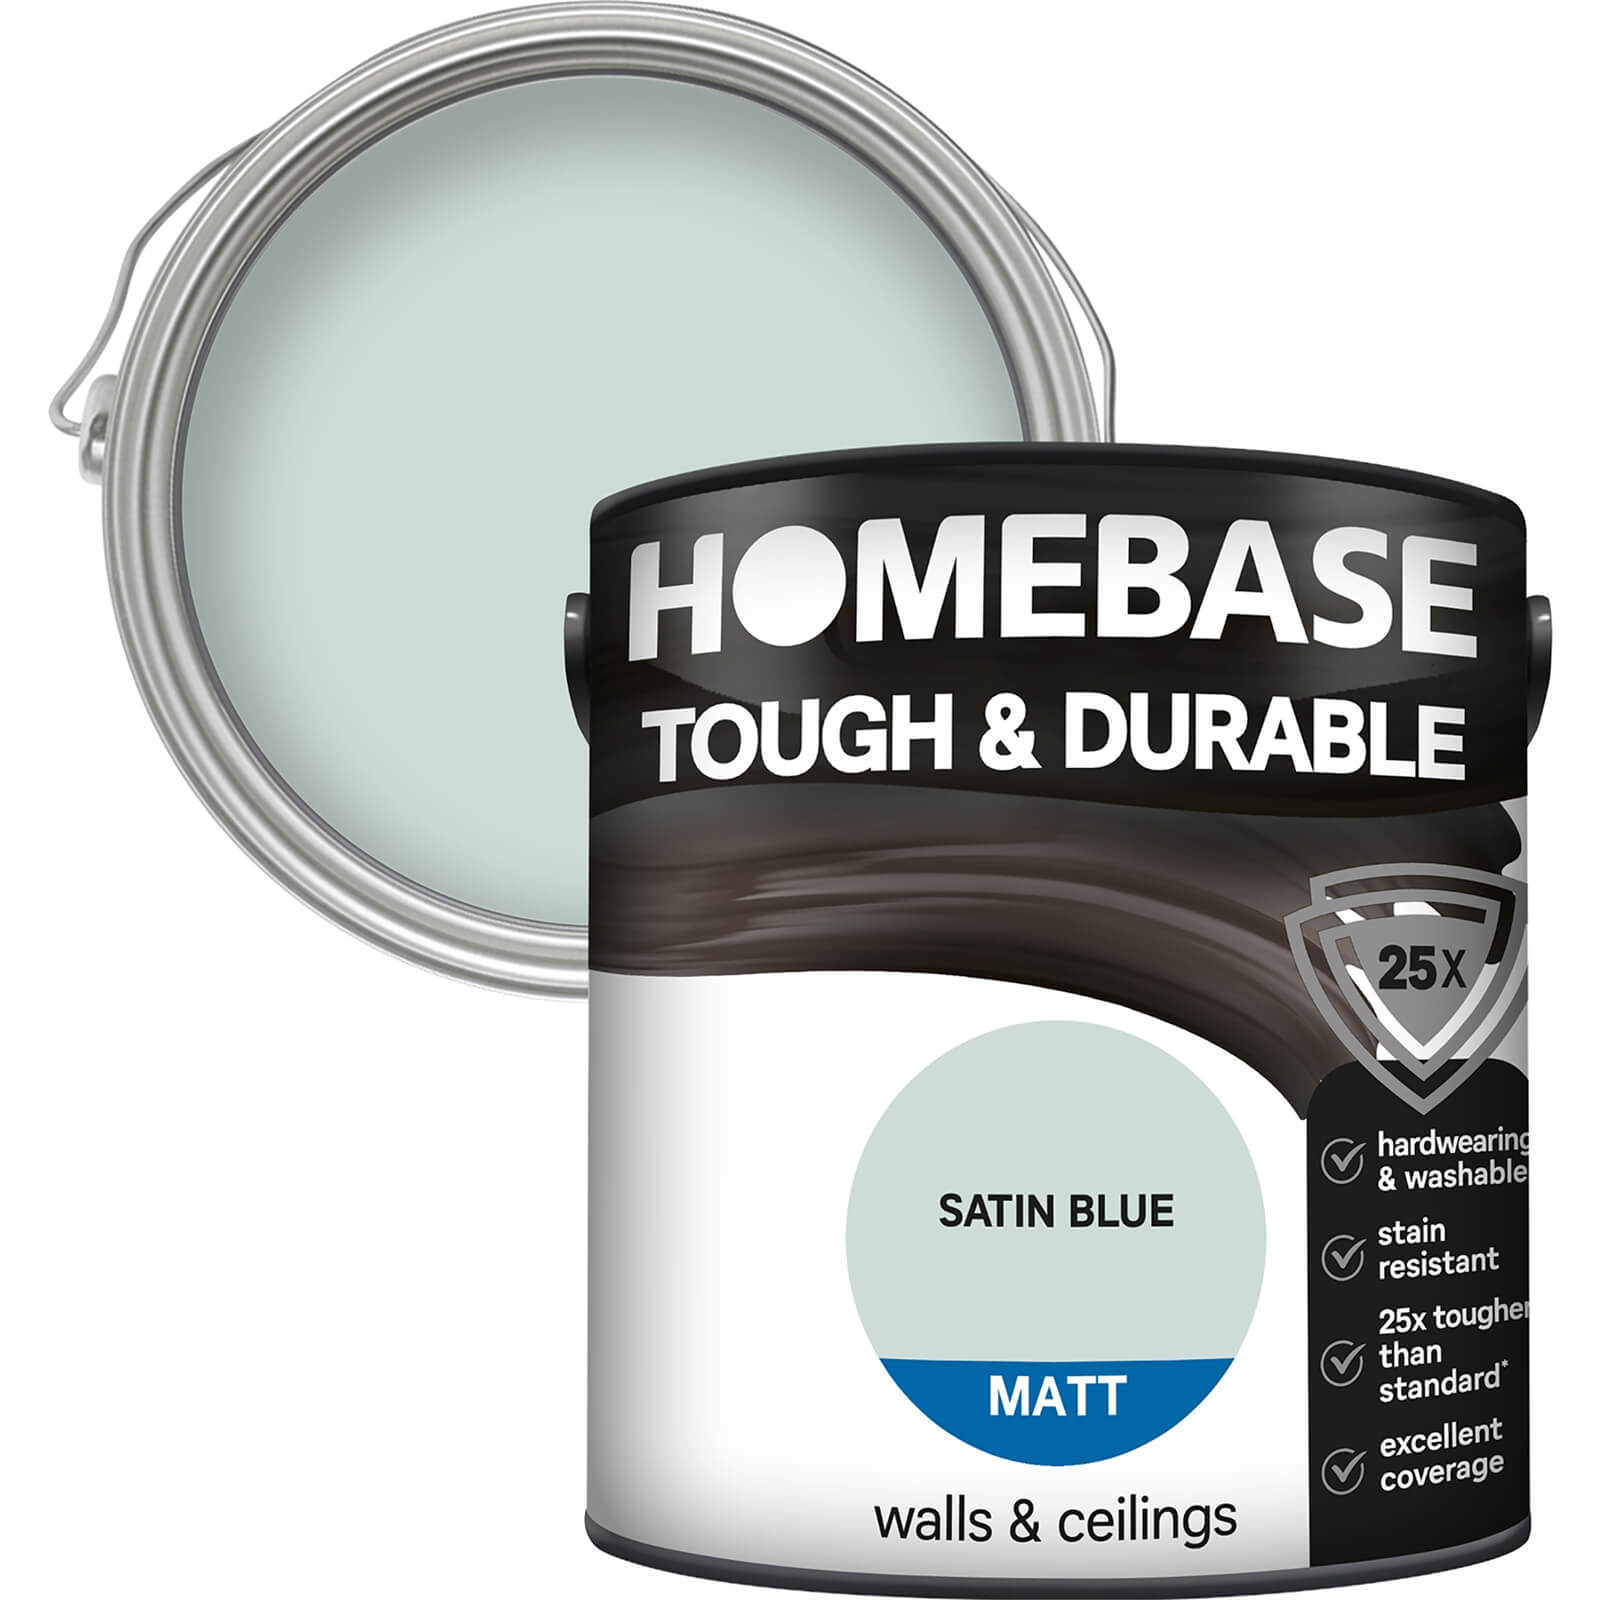 Homebase Tough & Durable Matt Paint Satin Blue - 2.5L